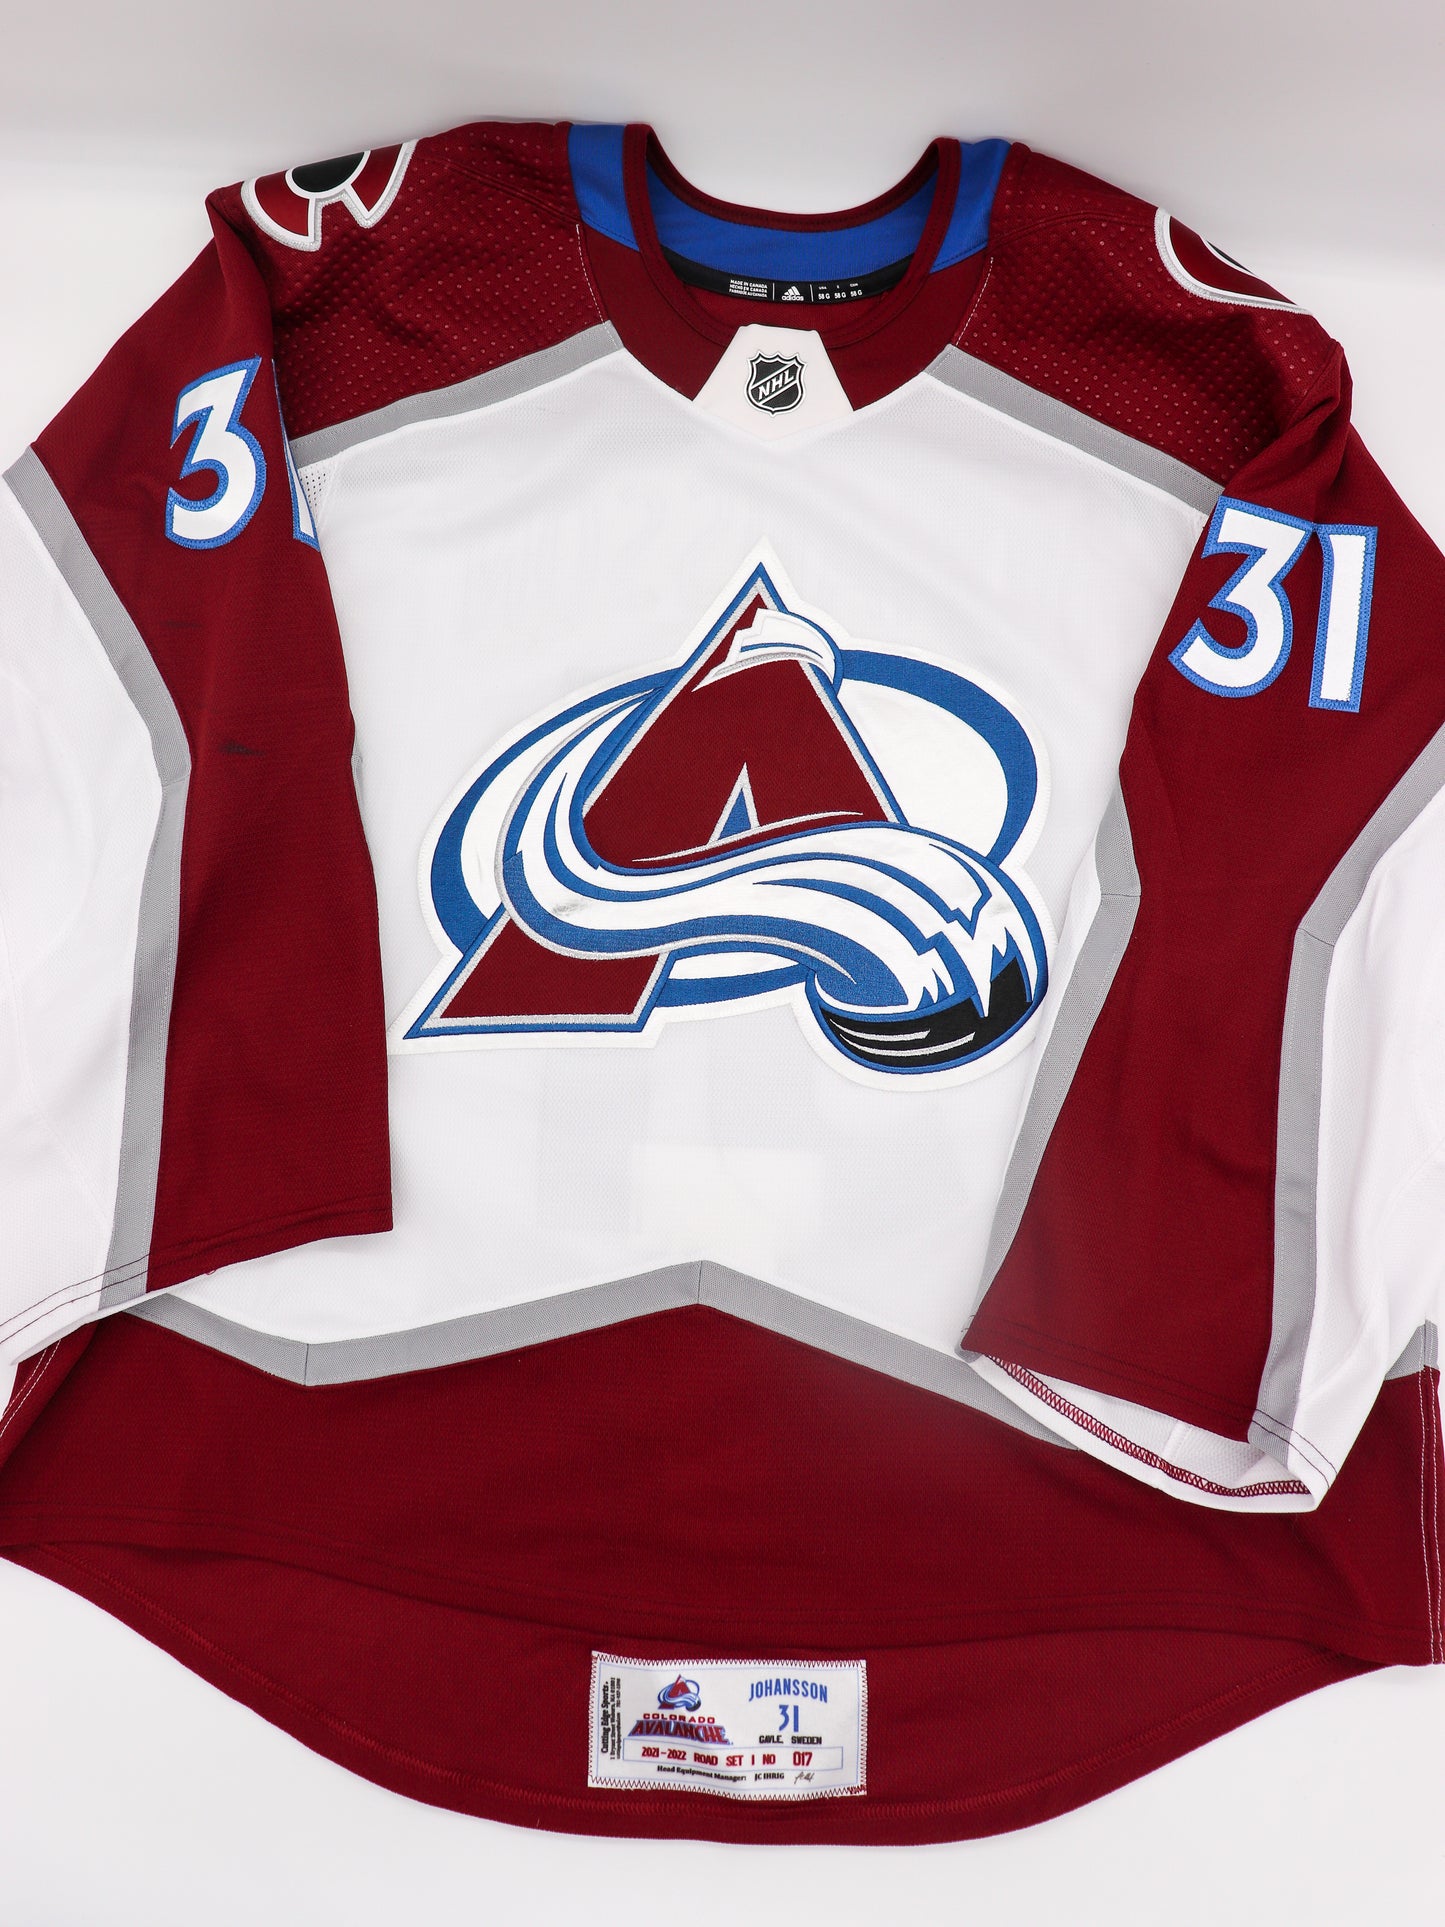 Colorado Avalanche 2022 Stanley Cup jersey